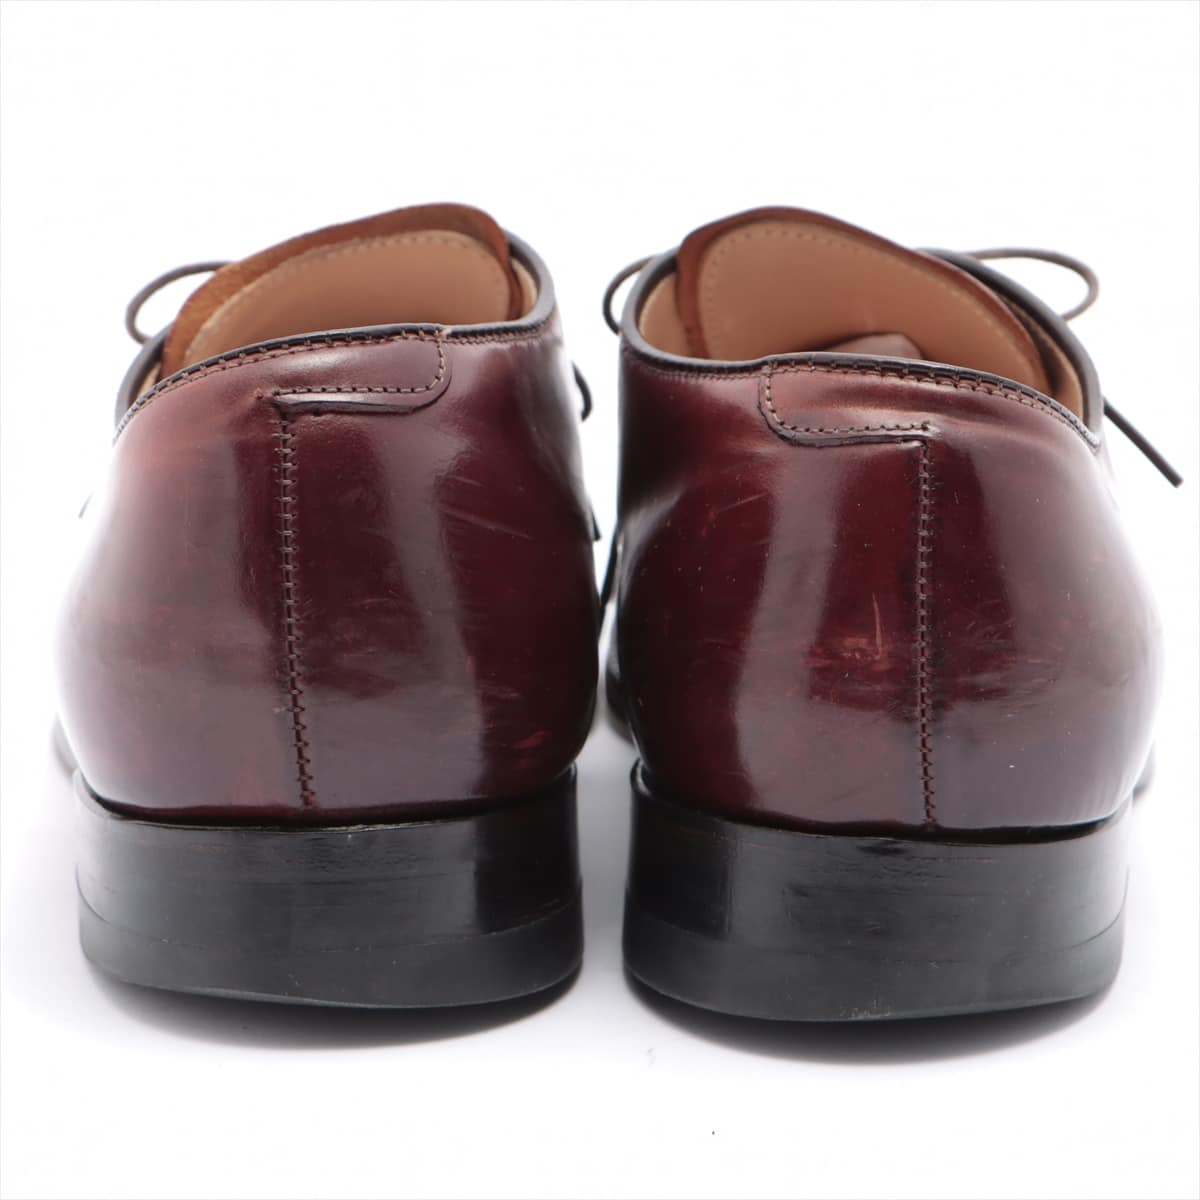 Alden Leather Leather shoes 8.5 Men's Brown V-chip Cordovan